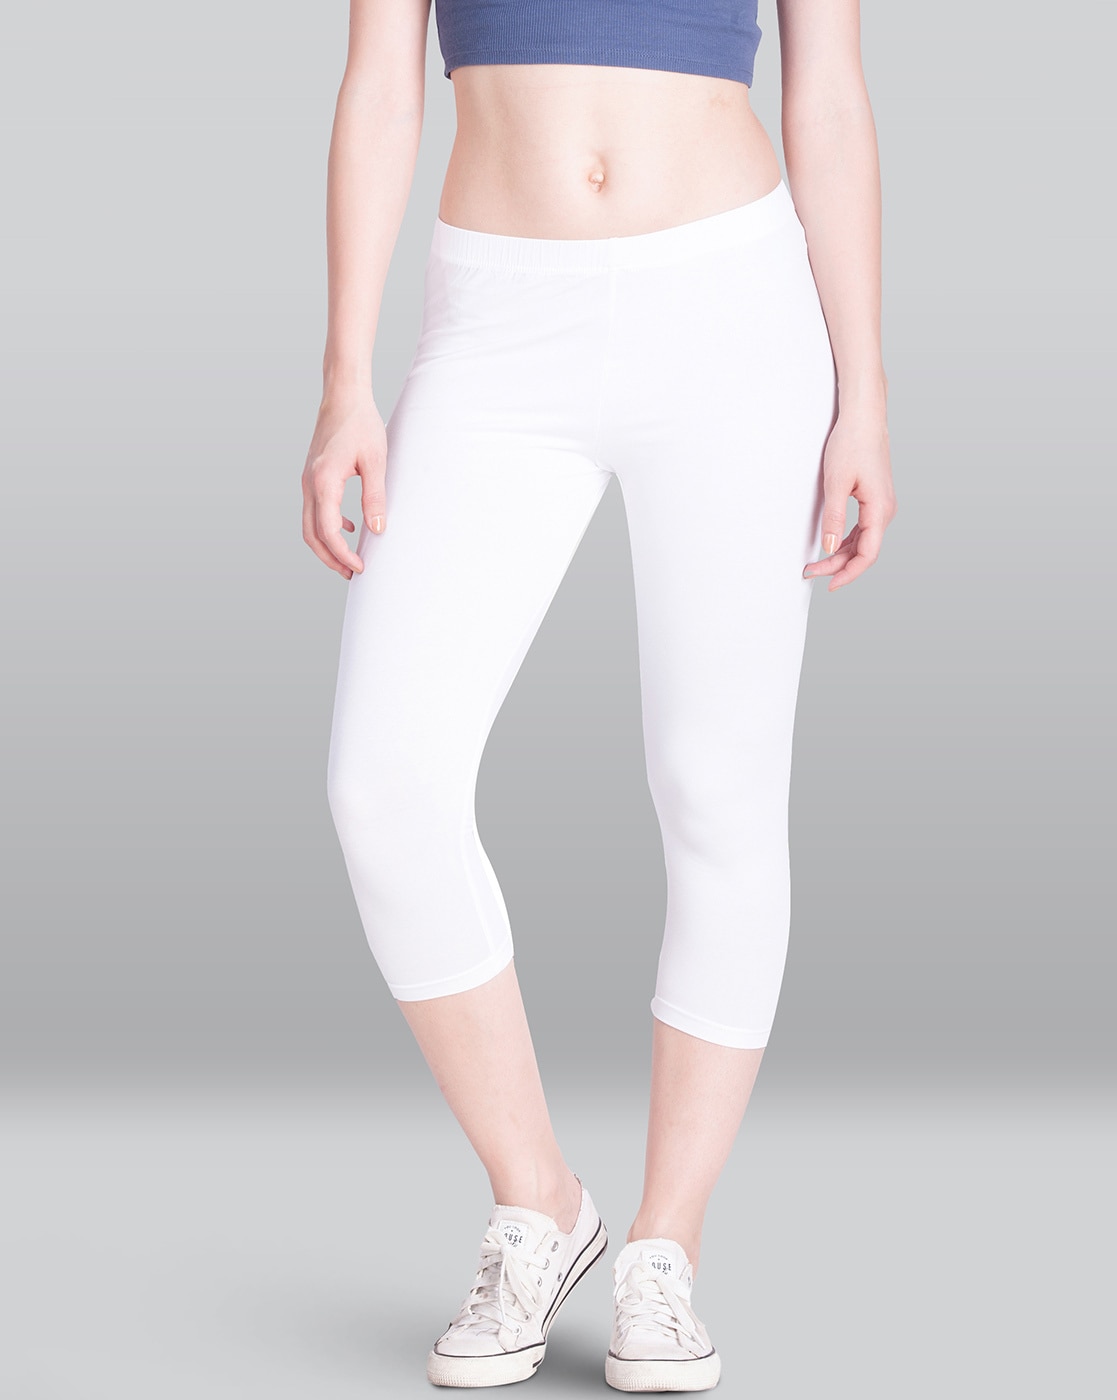 Prisma White Capri Leggings - Comfortable and Stylish